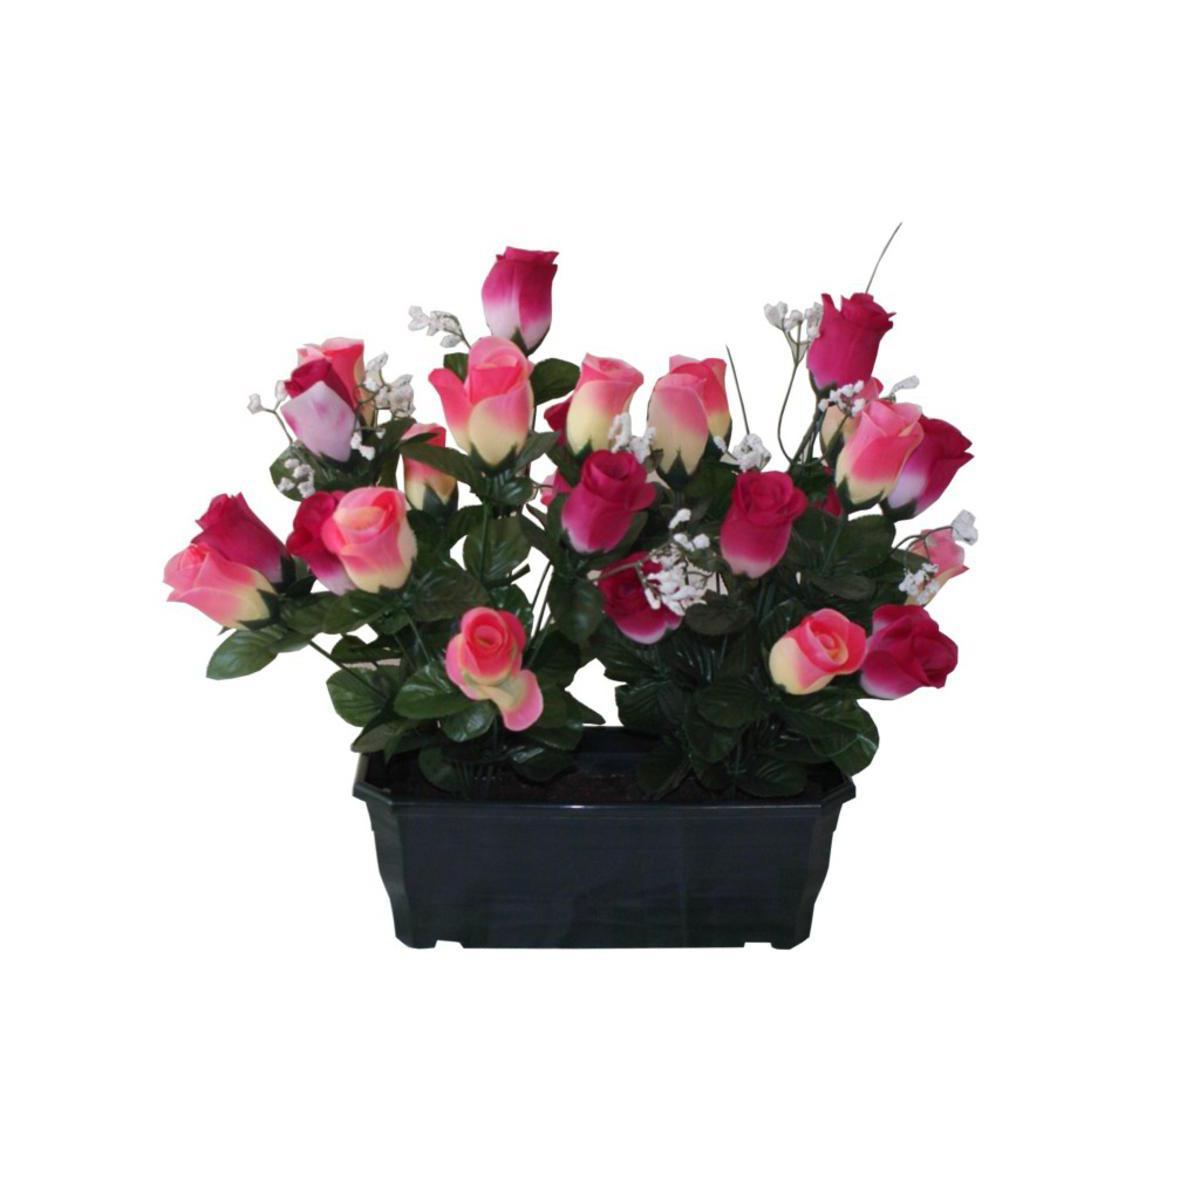 Jardinière de 28 roses et gypsophiles - Polyester - H 40 cm - Rose ou fuchsia